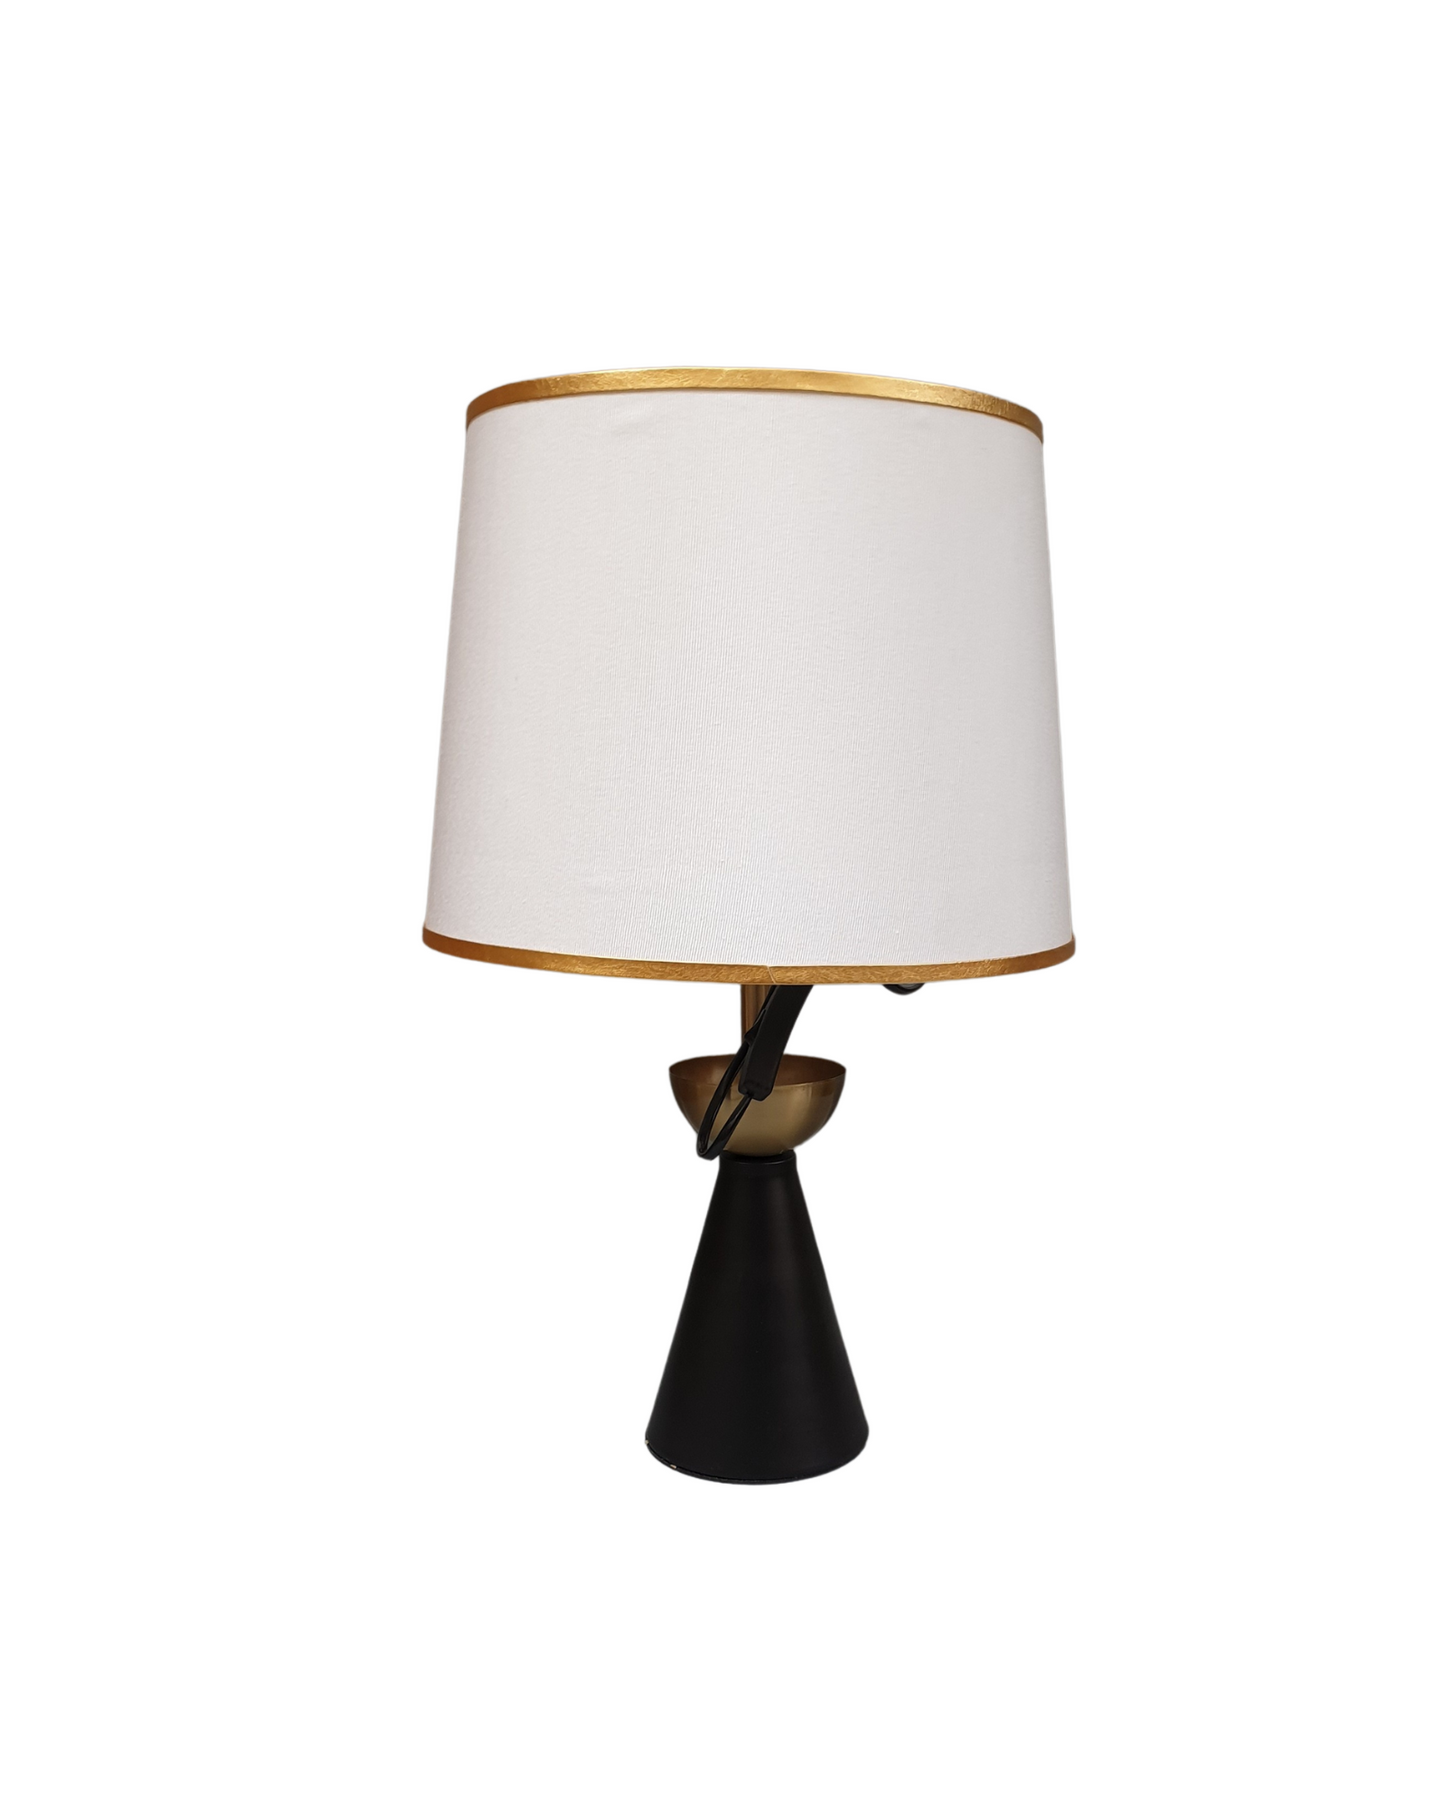 Black & Golden Metal Table Lamp